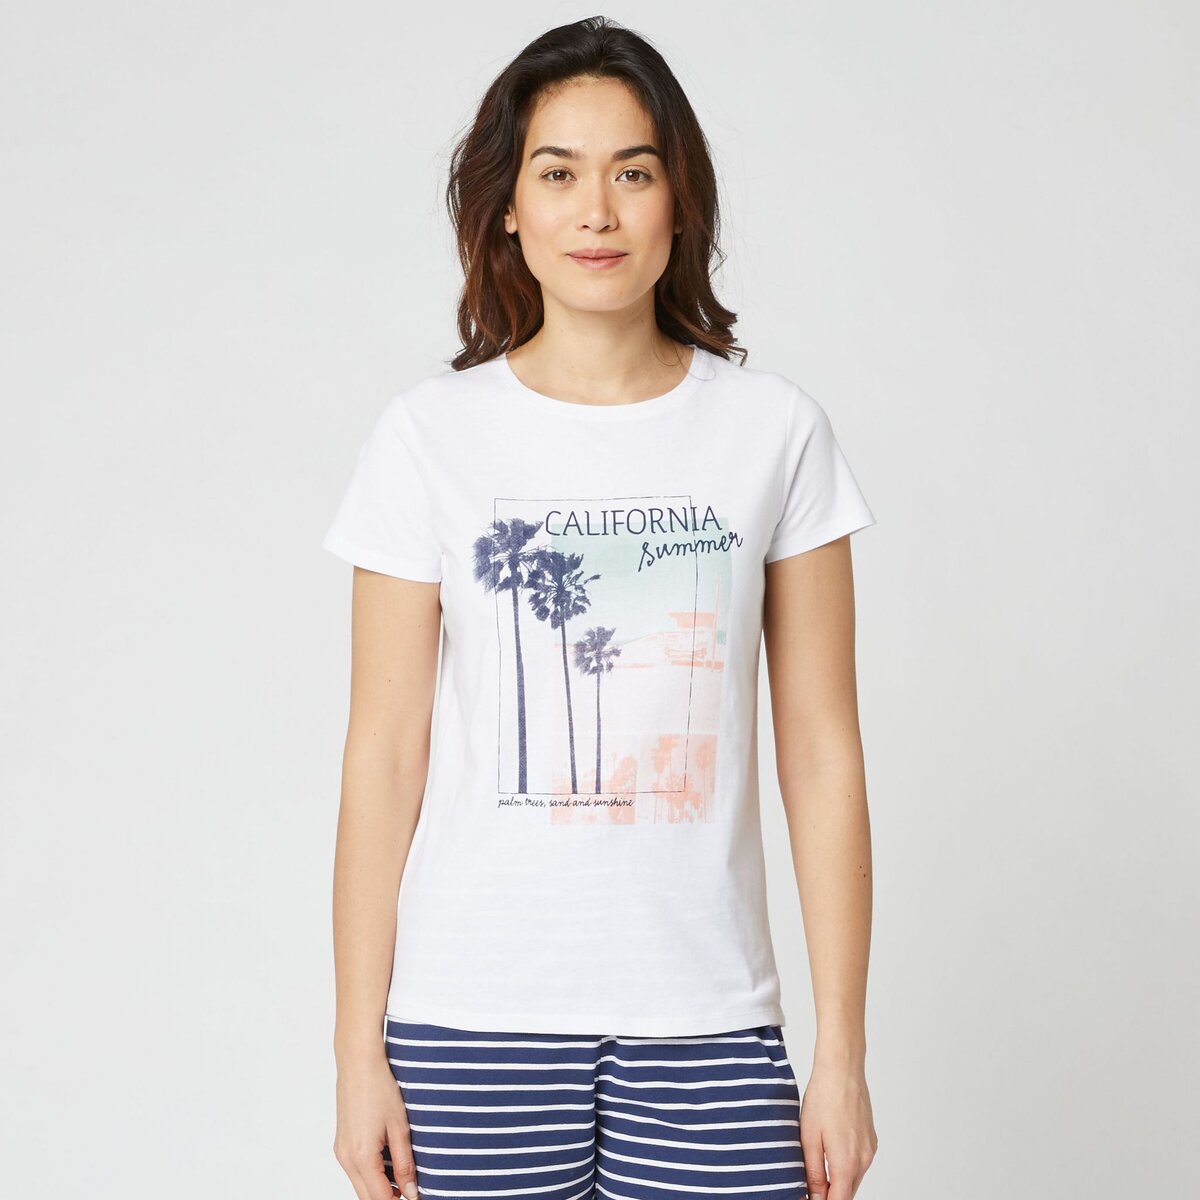 IN EXTENSO T-shirt manches courtes blanc imprimé california summer femme